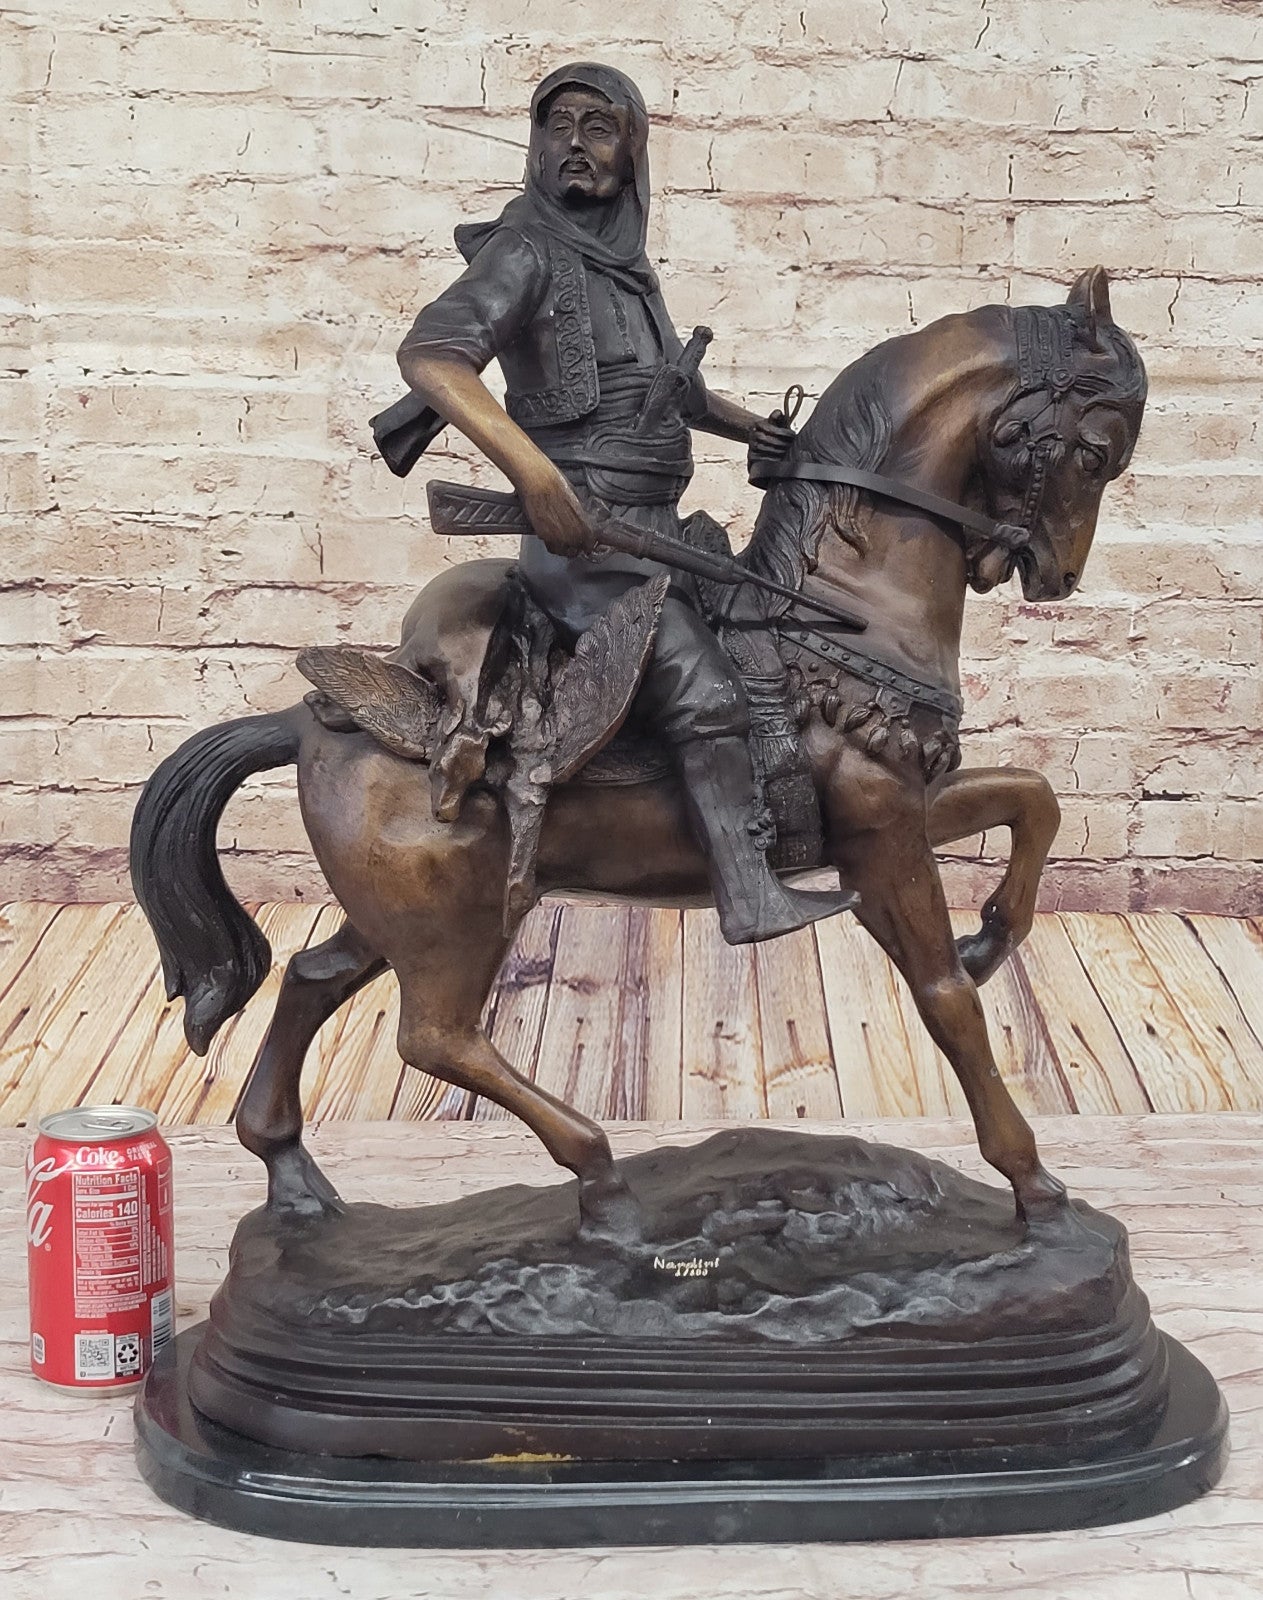 Limited Edition Arabian Horseman with Gun Bronze Sculpture by Nardini Hot Cast